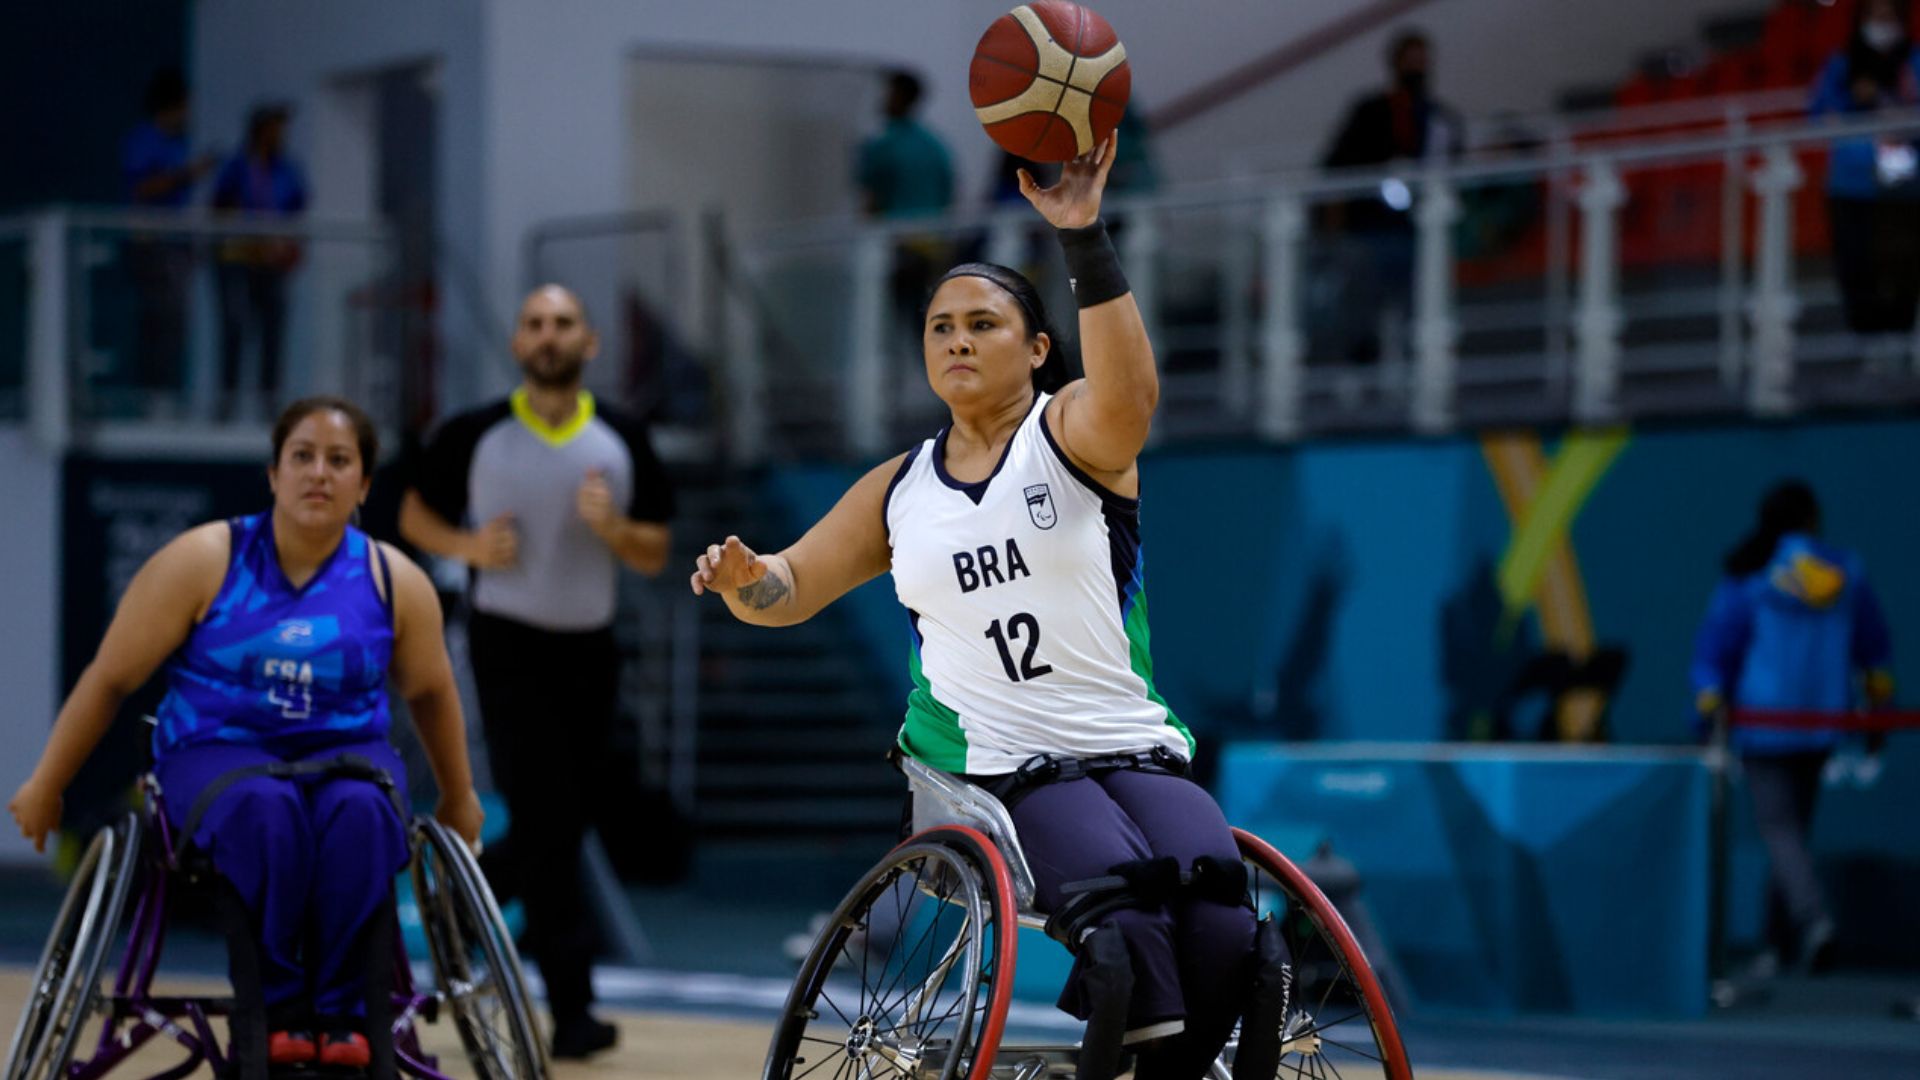 Brazil Advances to Semi-finals in Female's Wheelchair Basketball